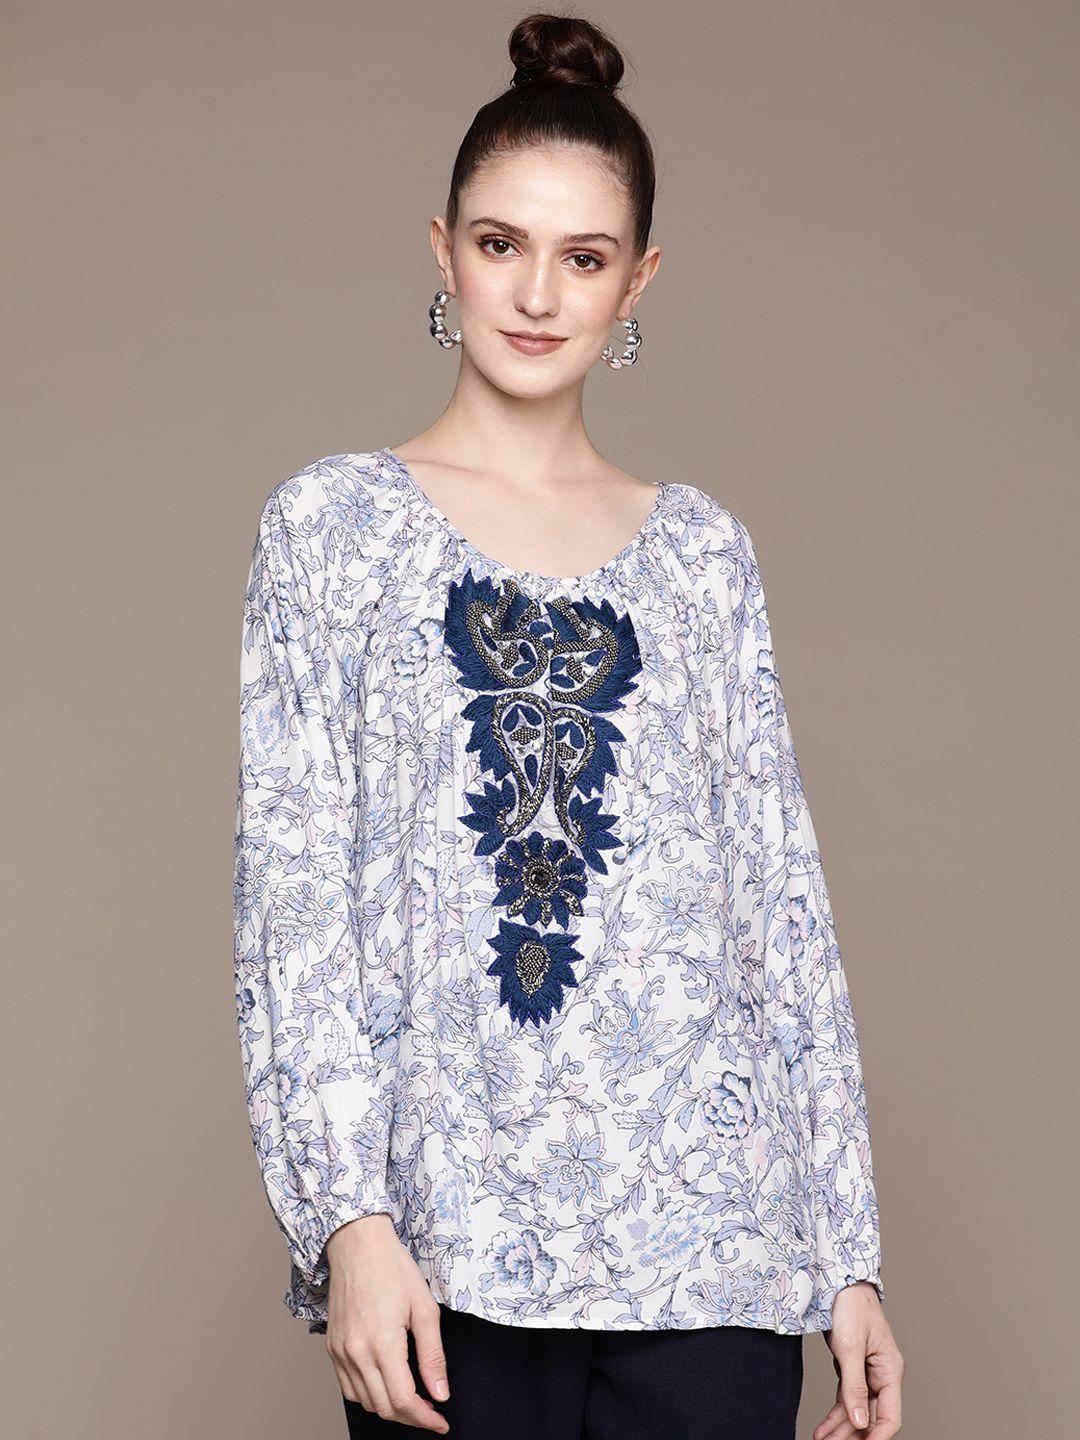 aarke ritu kumar white & blue floral print top